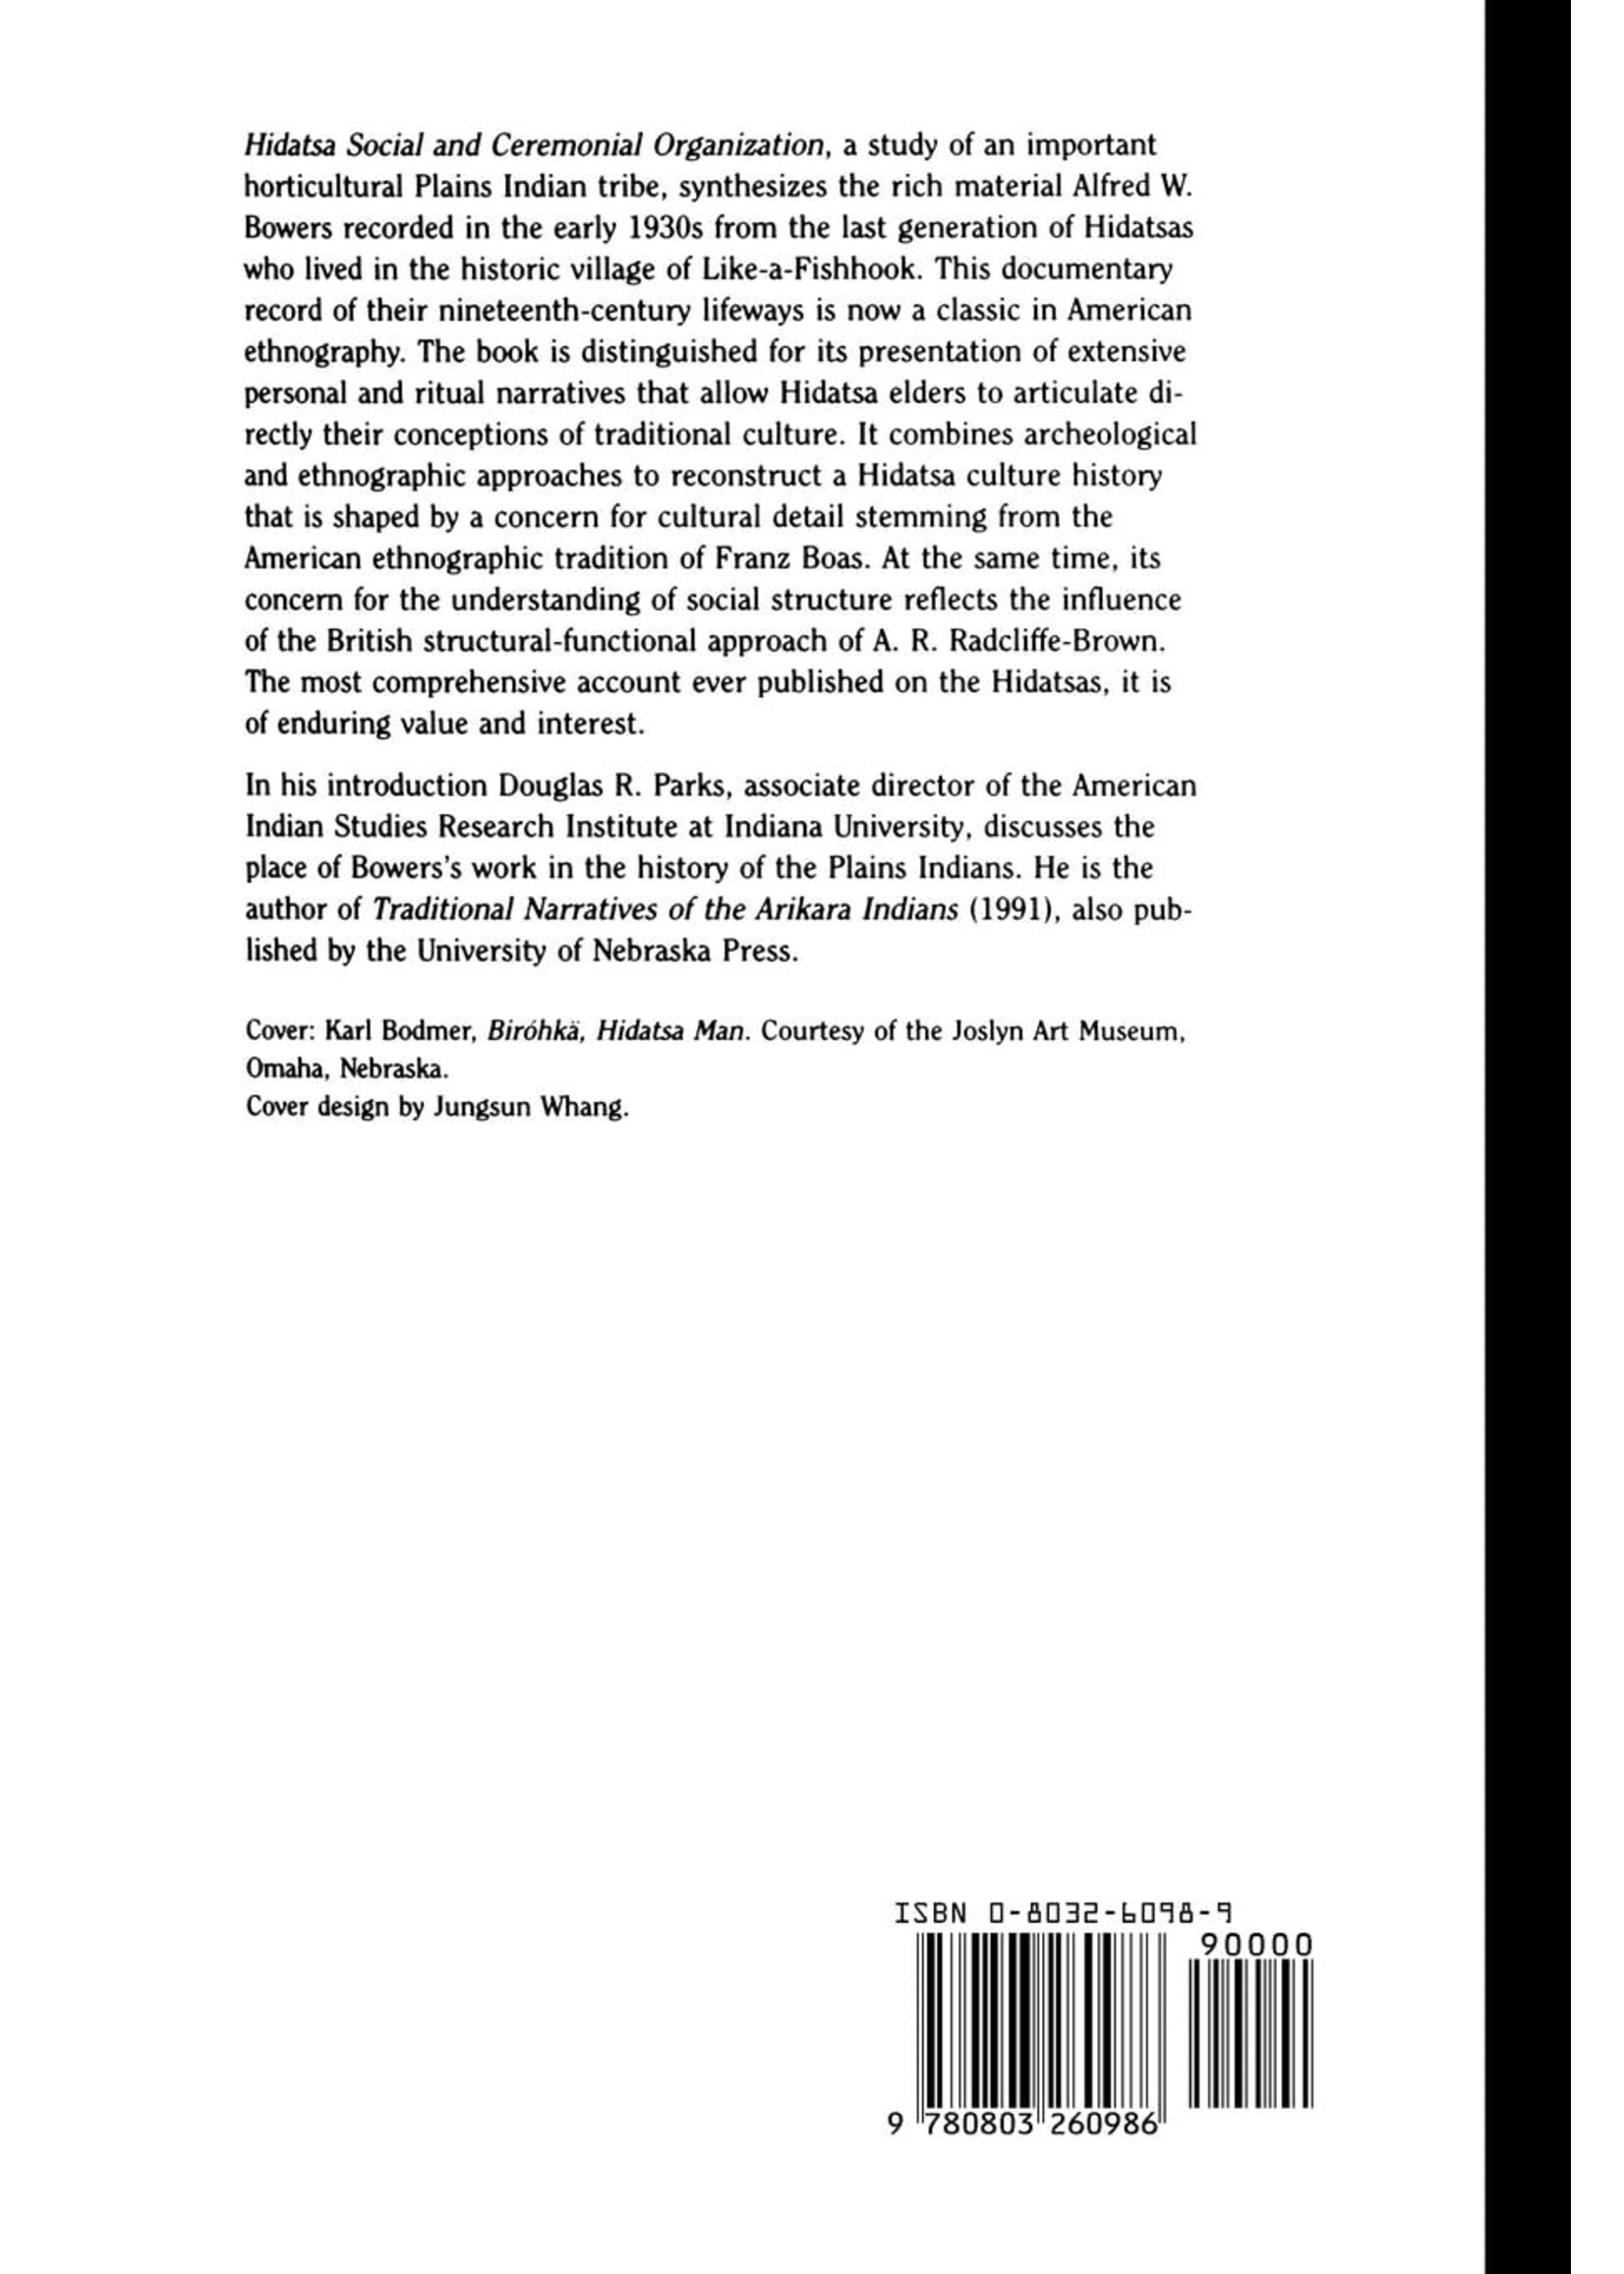 Hidatsa Social and Ceremonial Organization Paperback